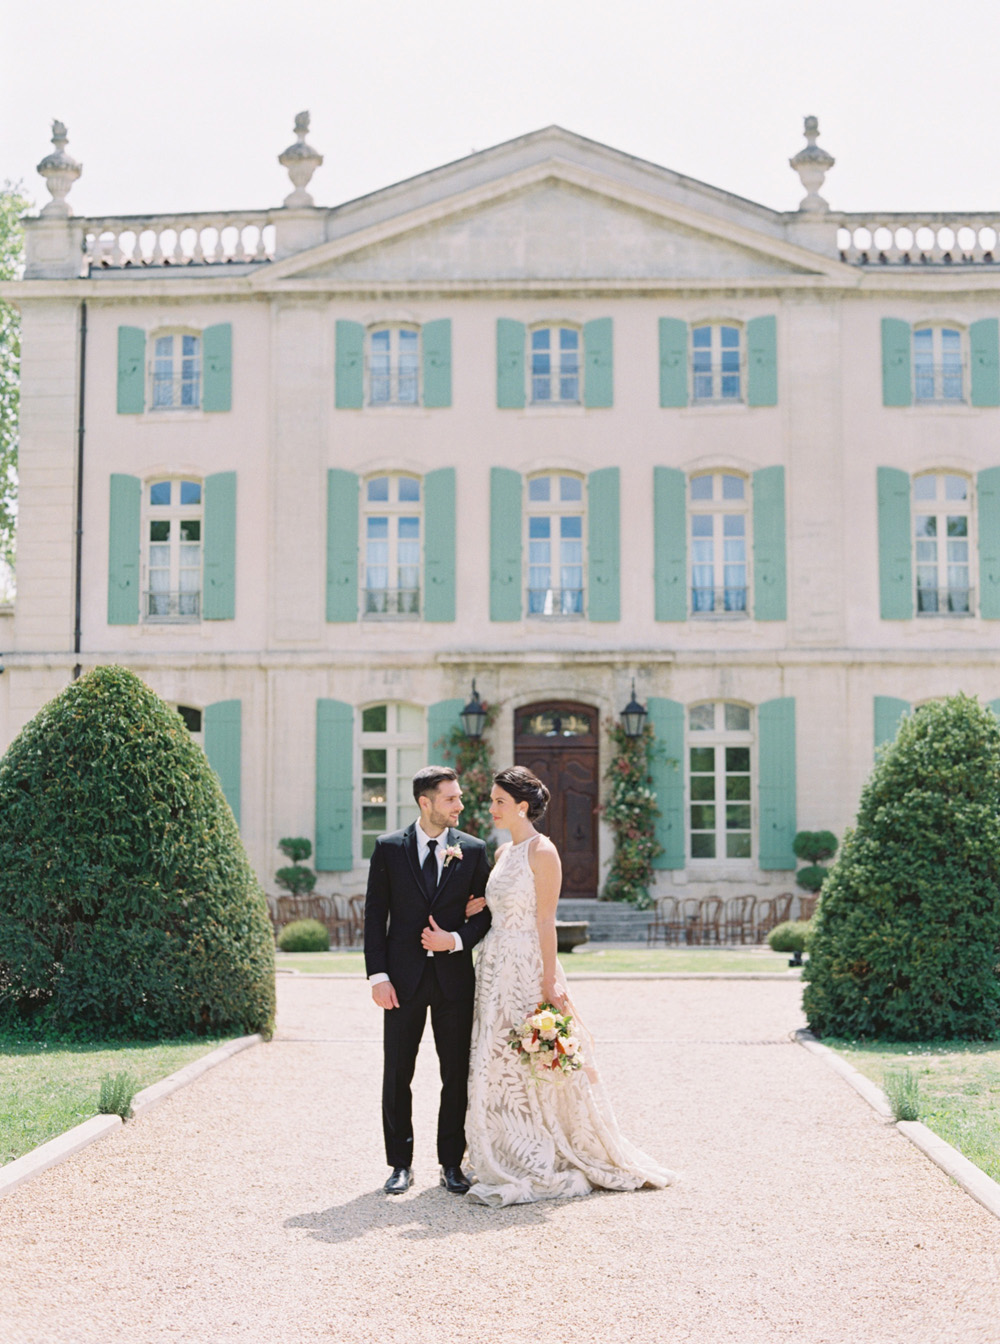 wedding in Provence, France at Chateau De Tourreau